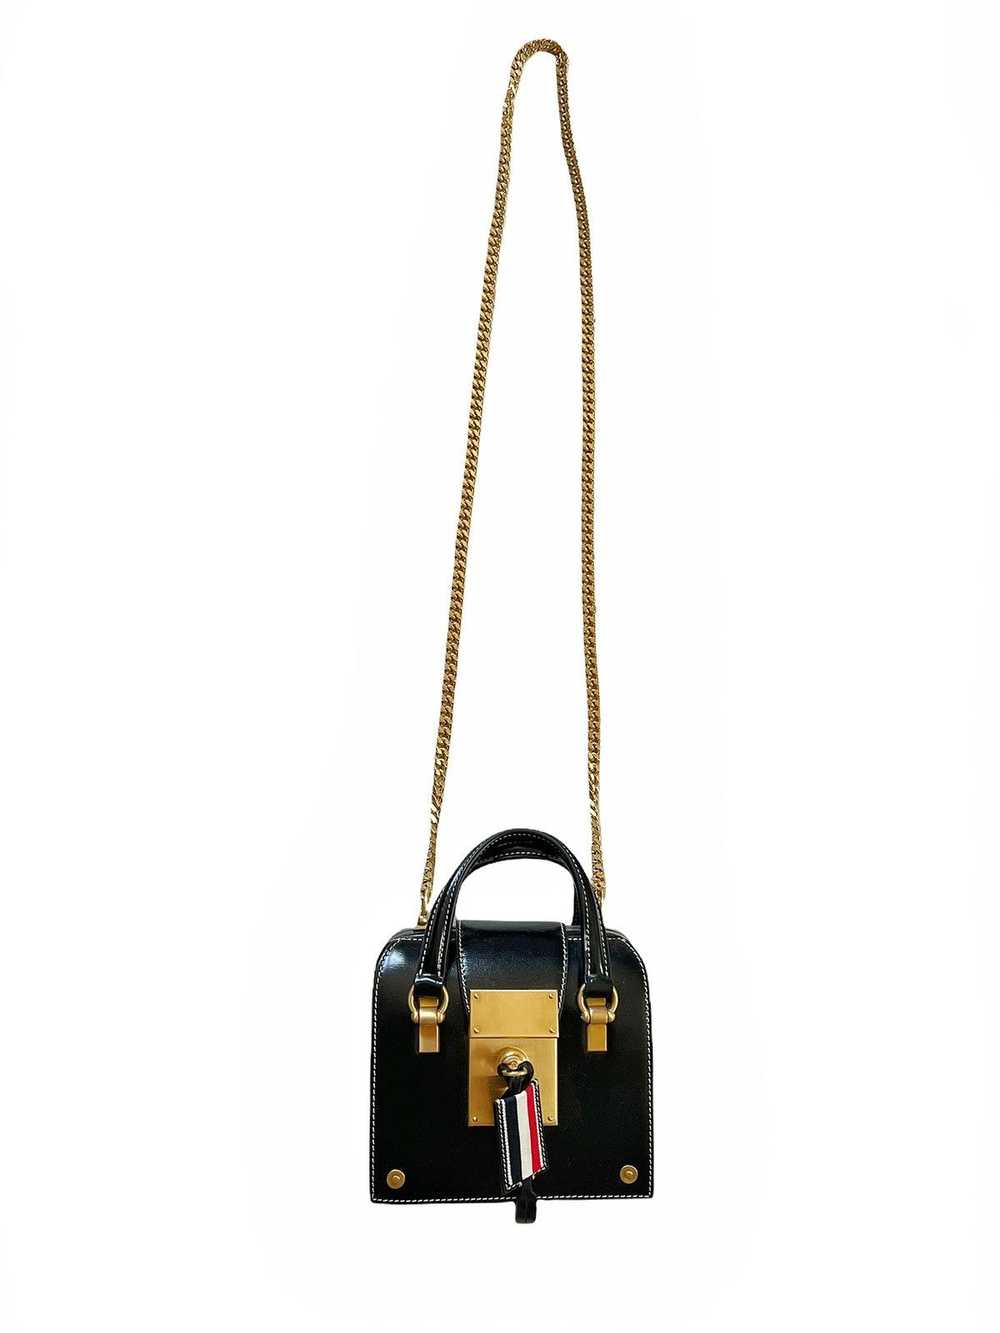 Thom Browne $5,100 Mrs. Thom Chain Crossbody Bag - image 2